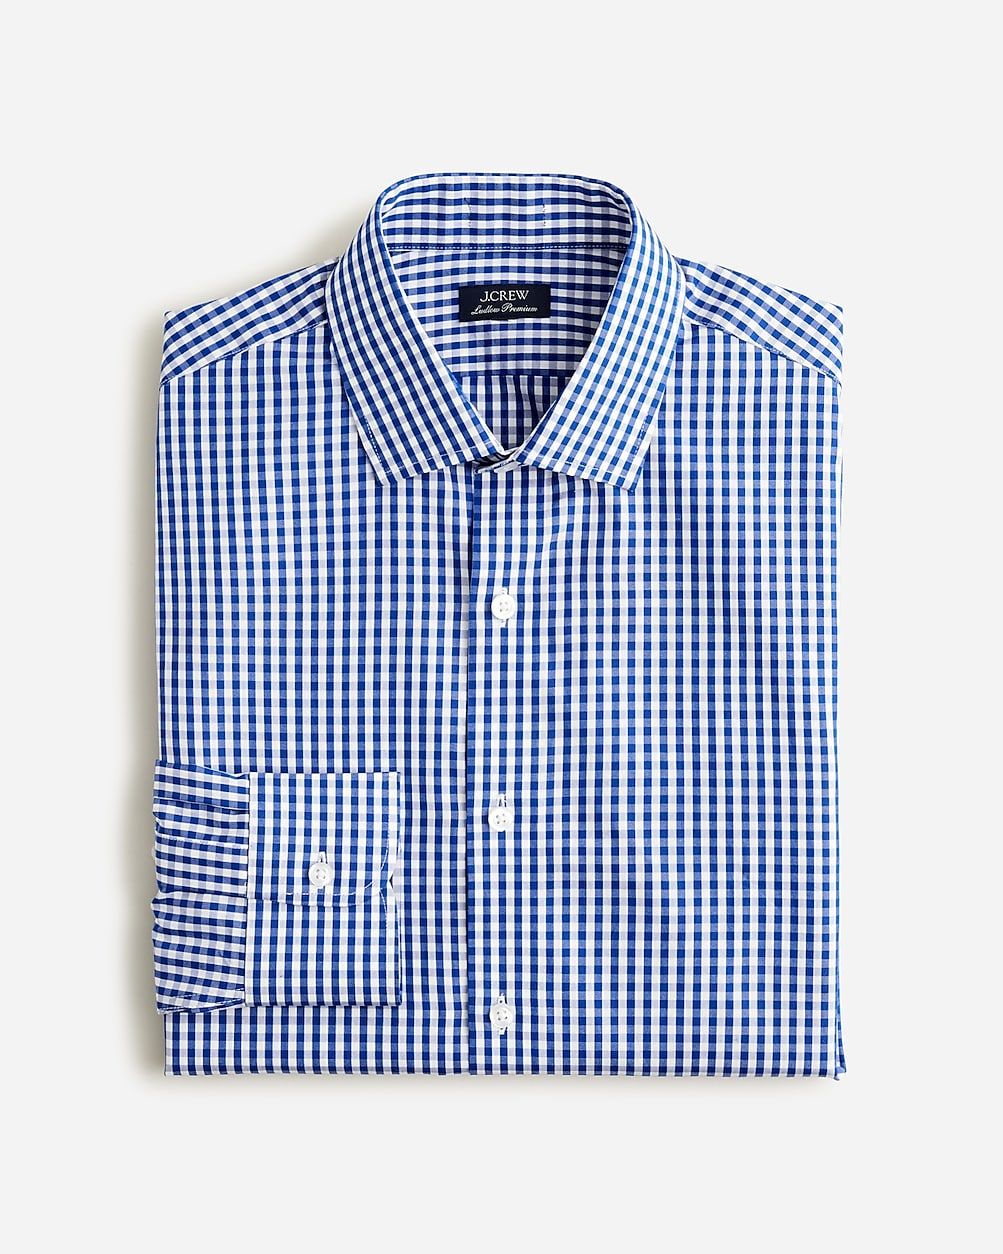 Ludlow Premium fine cotton dress shirt | J.Crew US